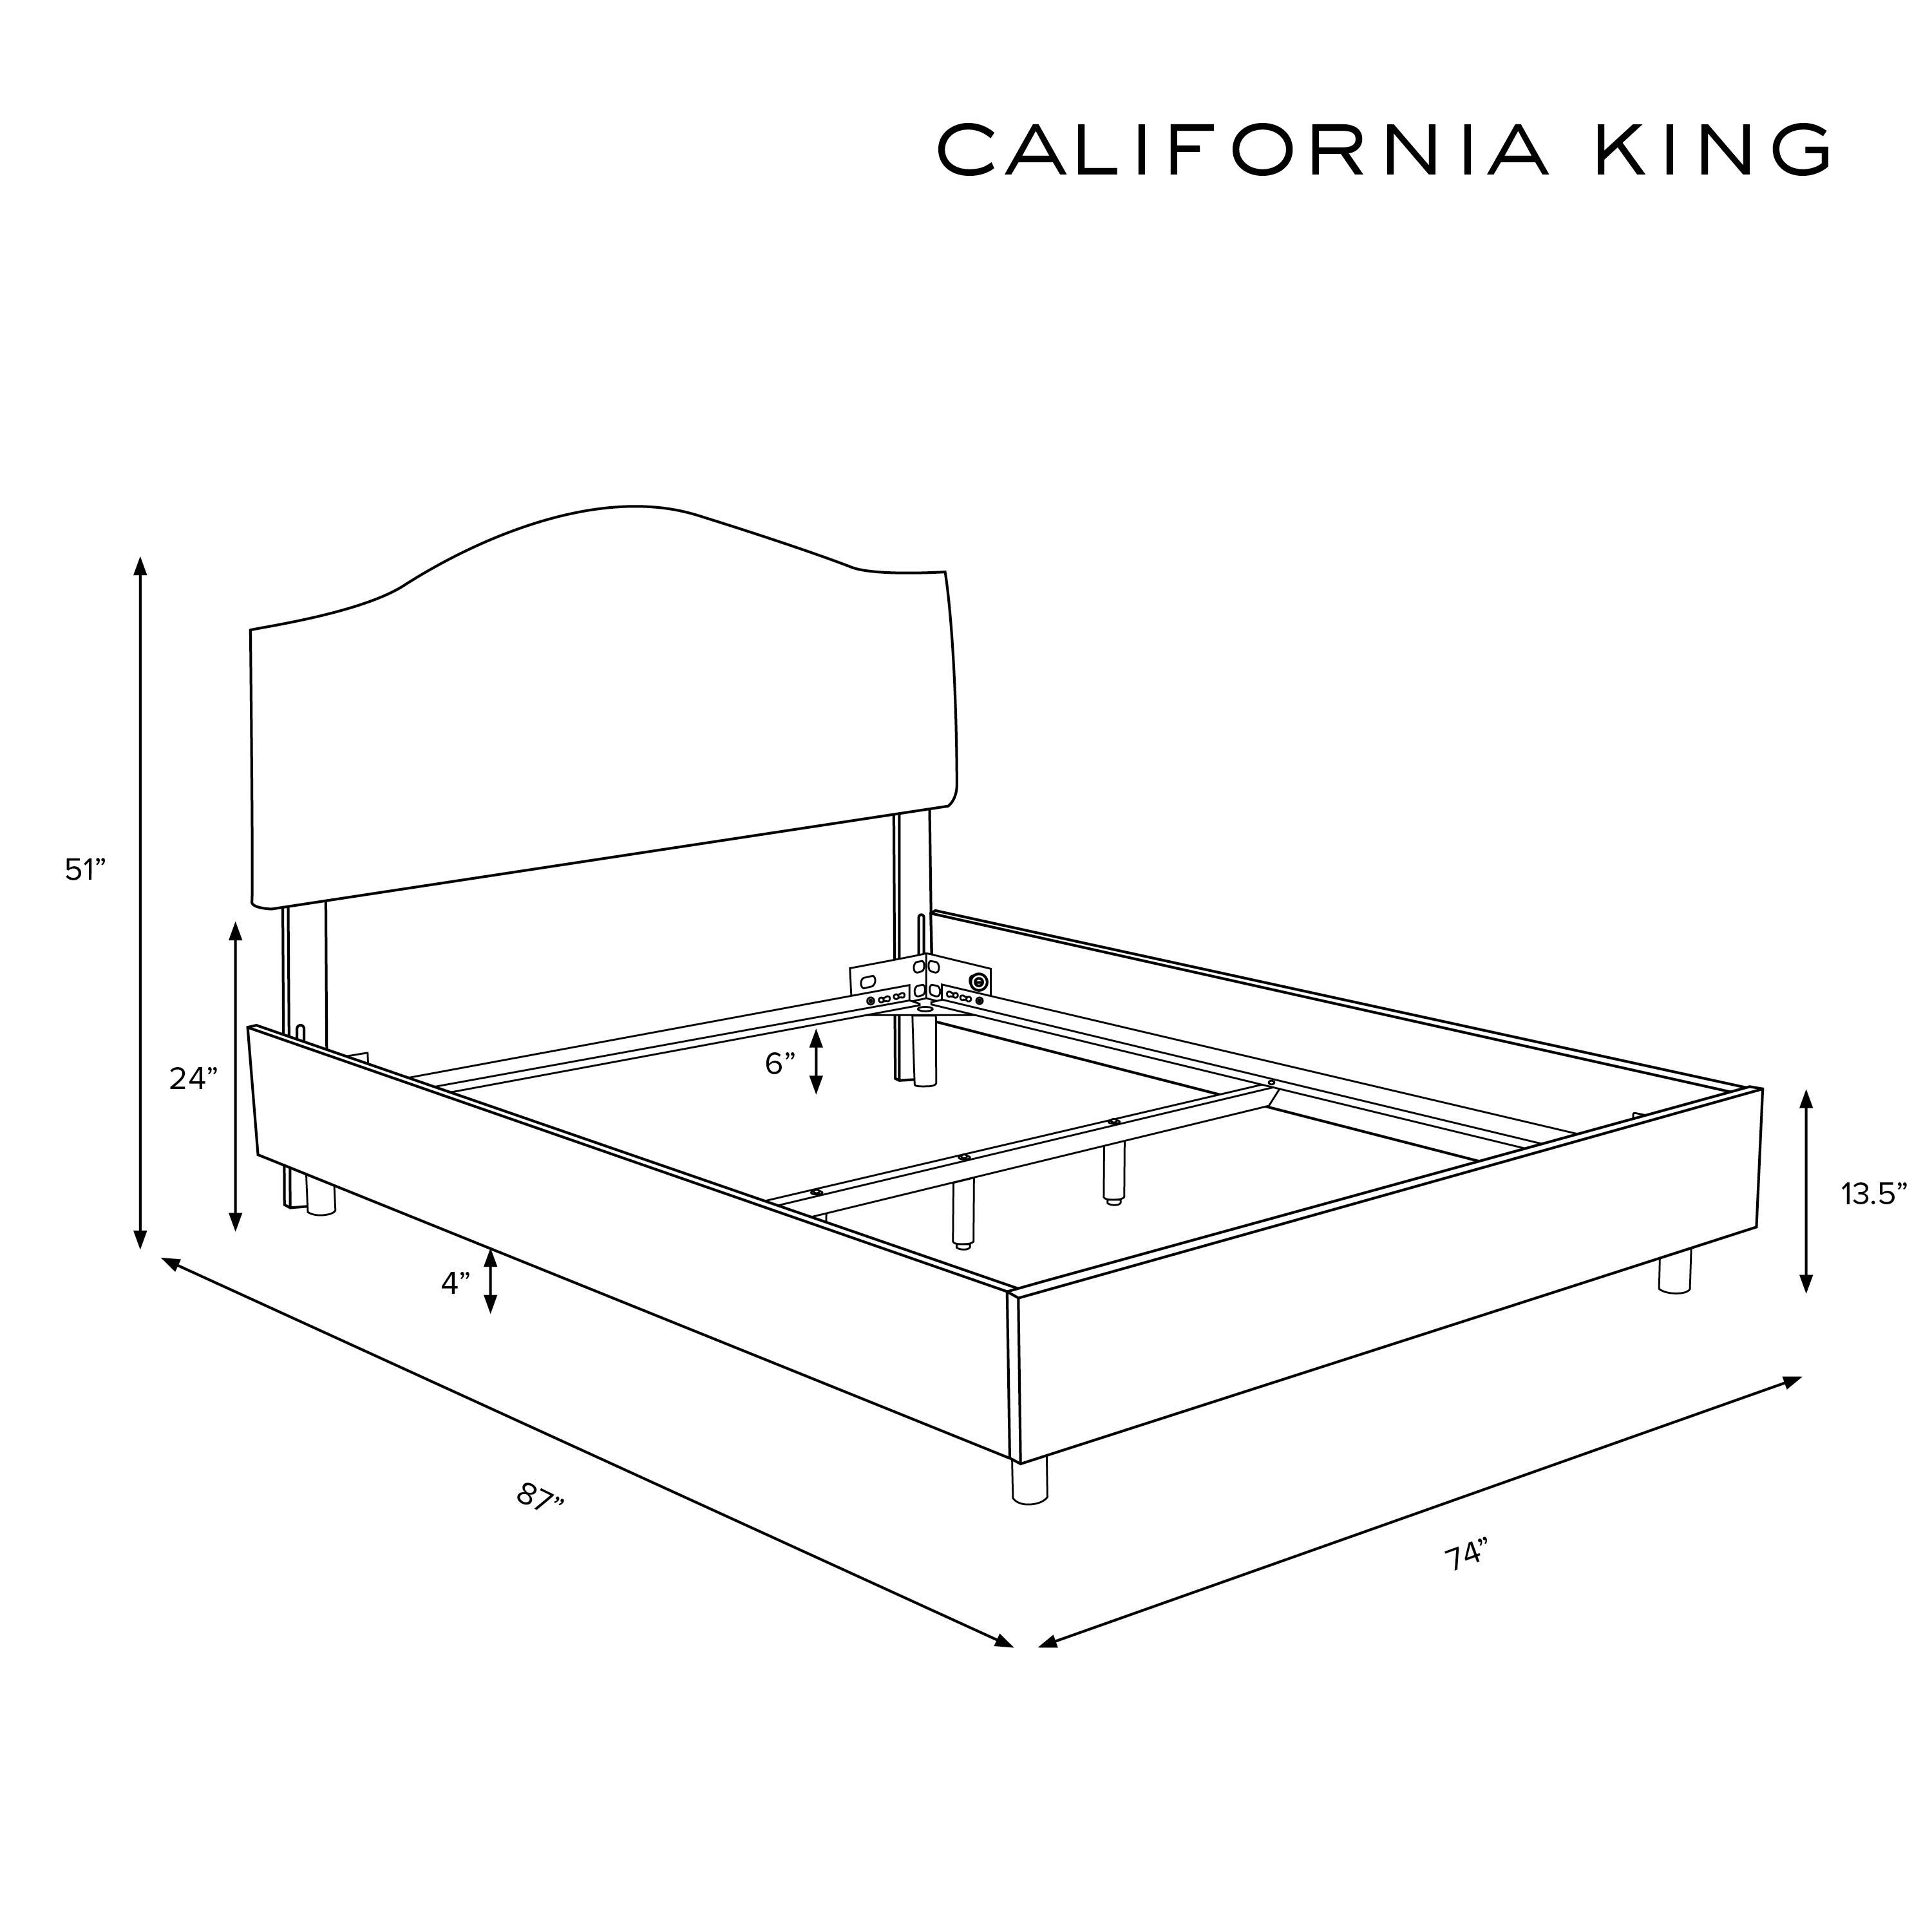 California King Kenmore Bed in Zuma Linen - Image 5